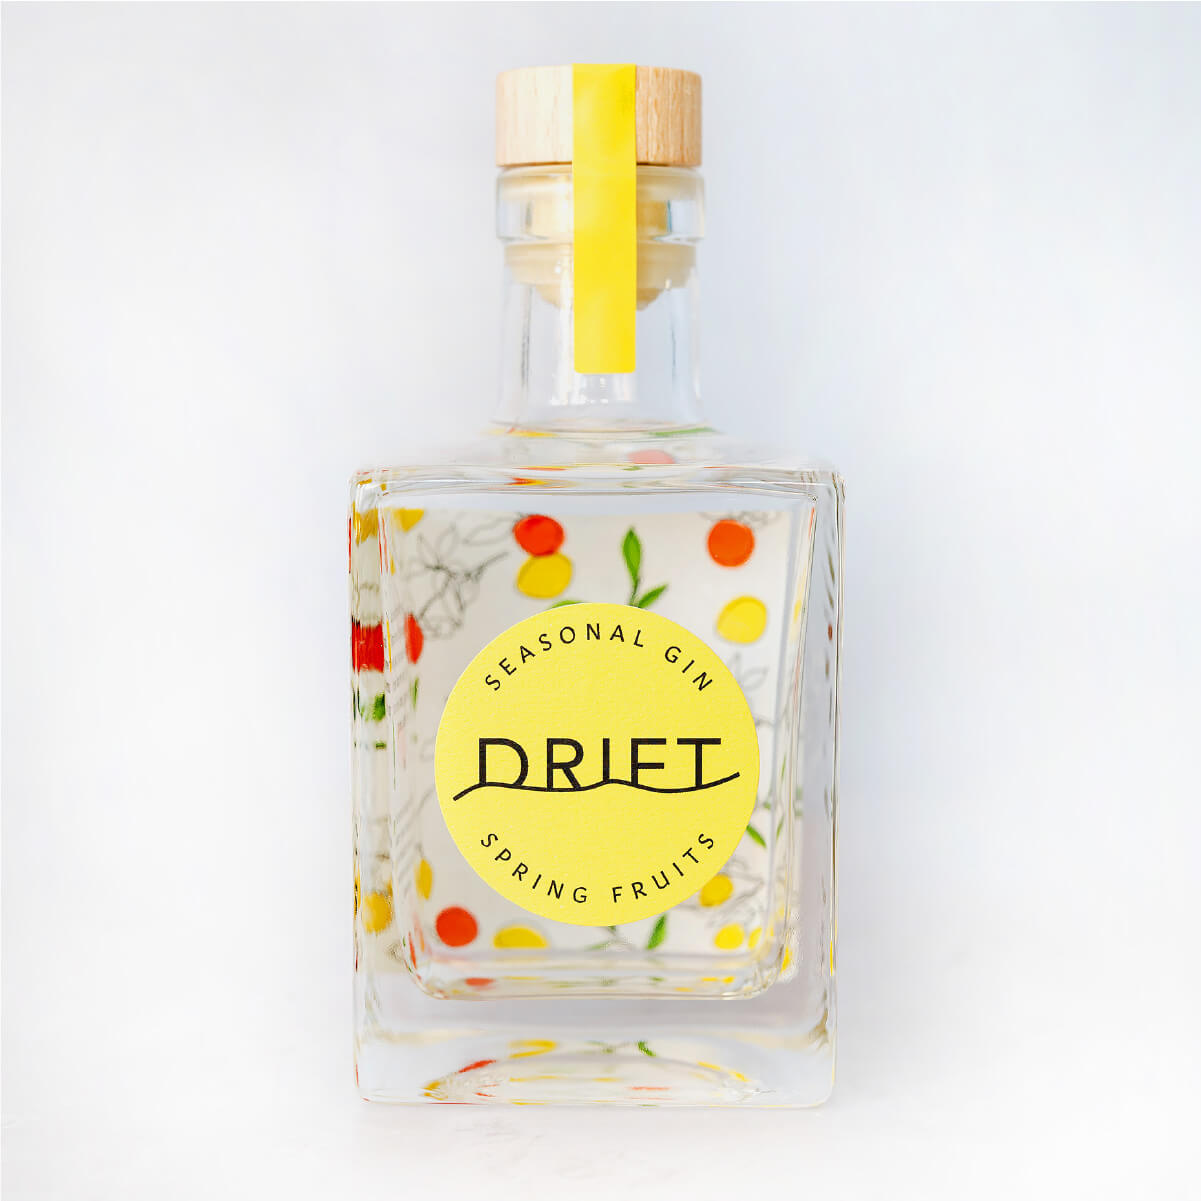 Drift Gin Spring packaging